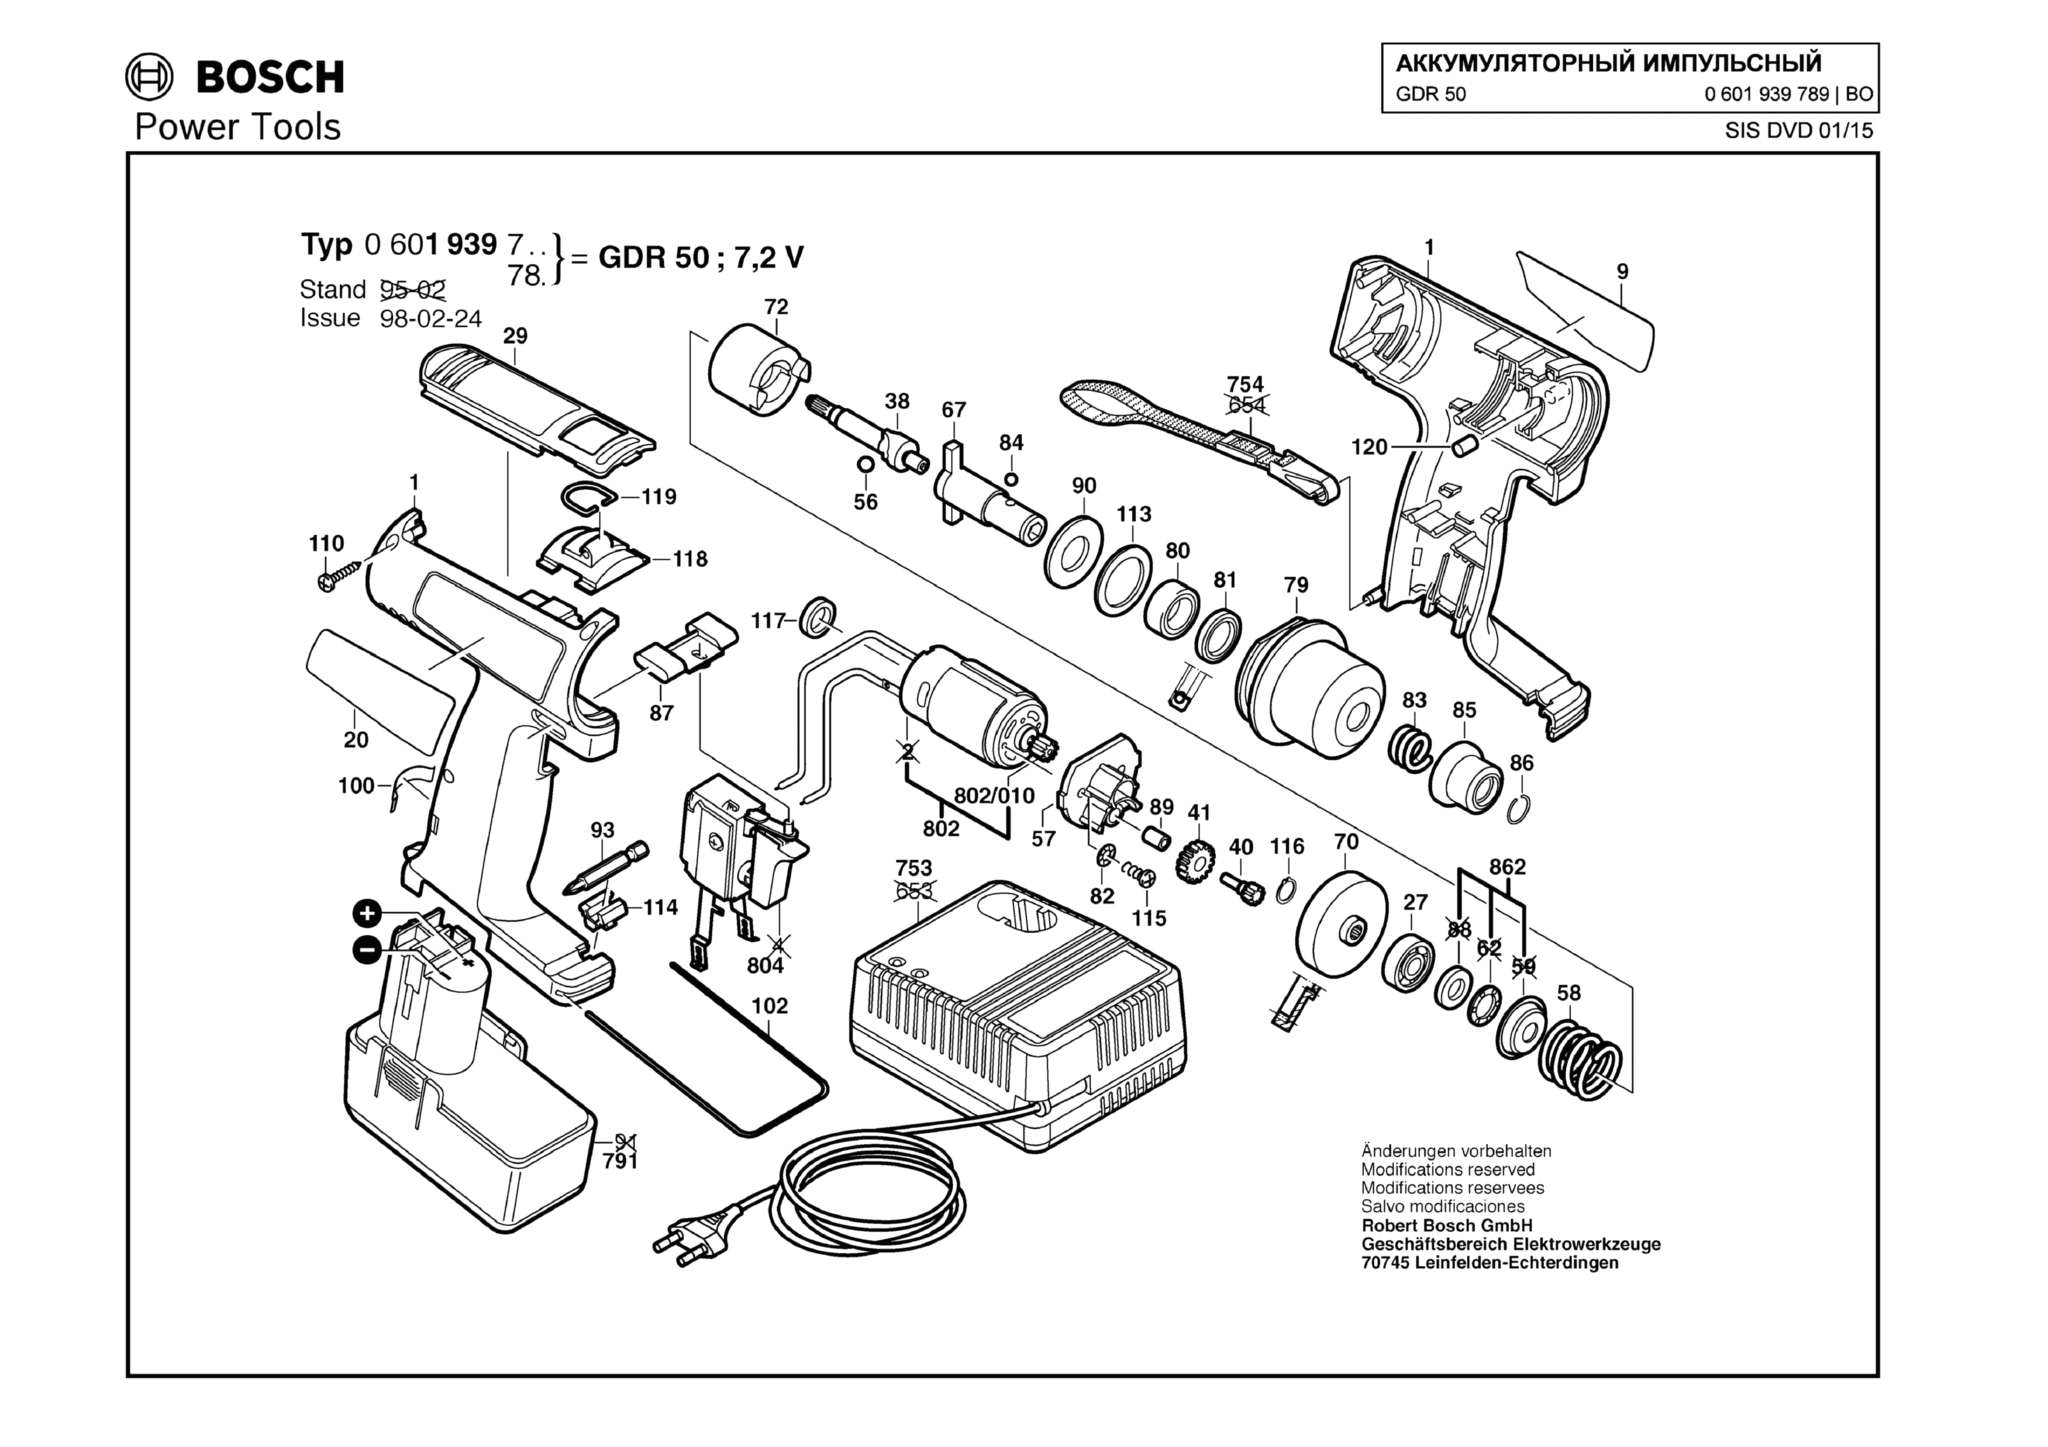 Запчасти, схема и деталировка Bosch GDR 50 (ТИП 0601939789)